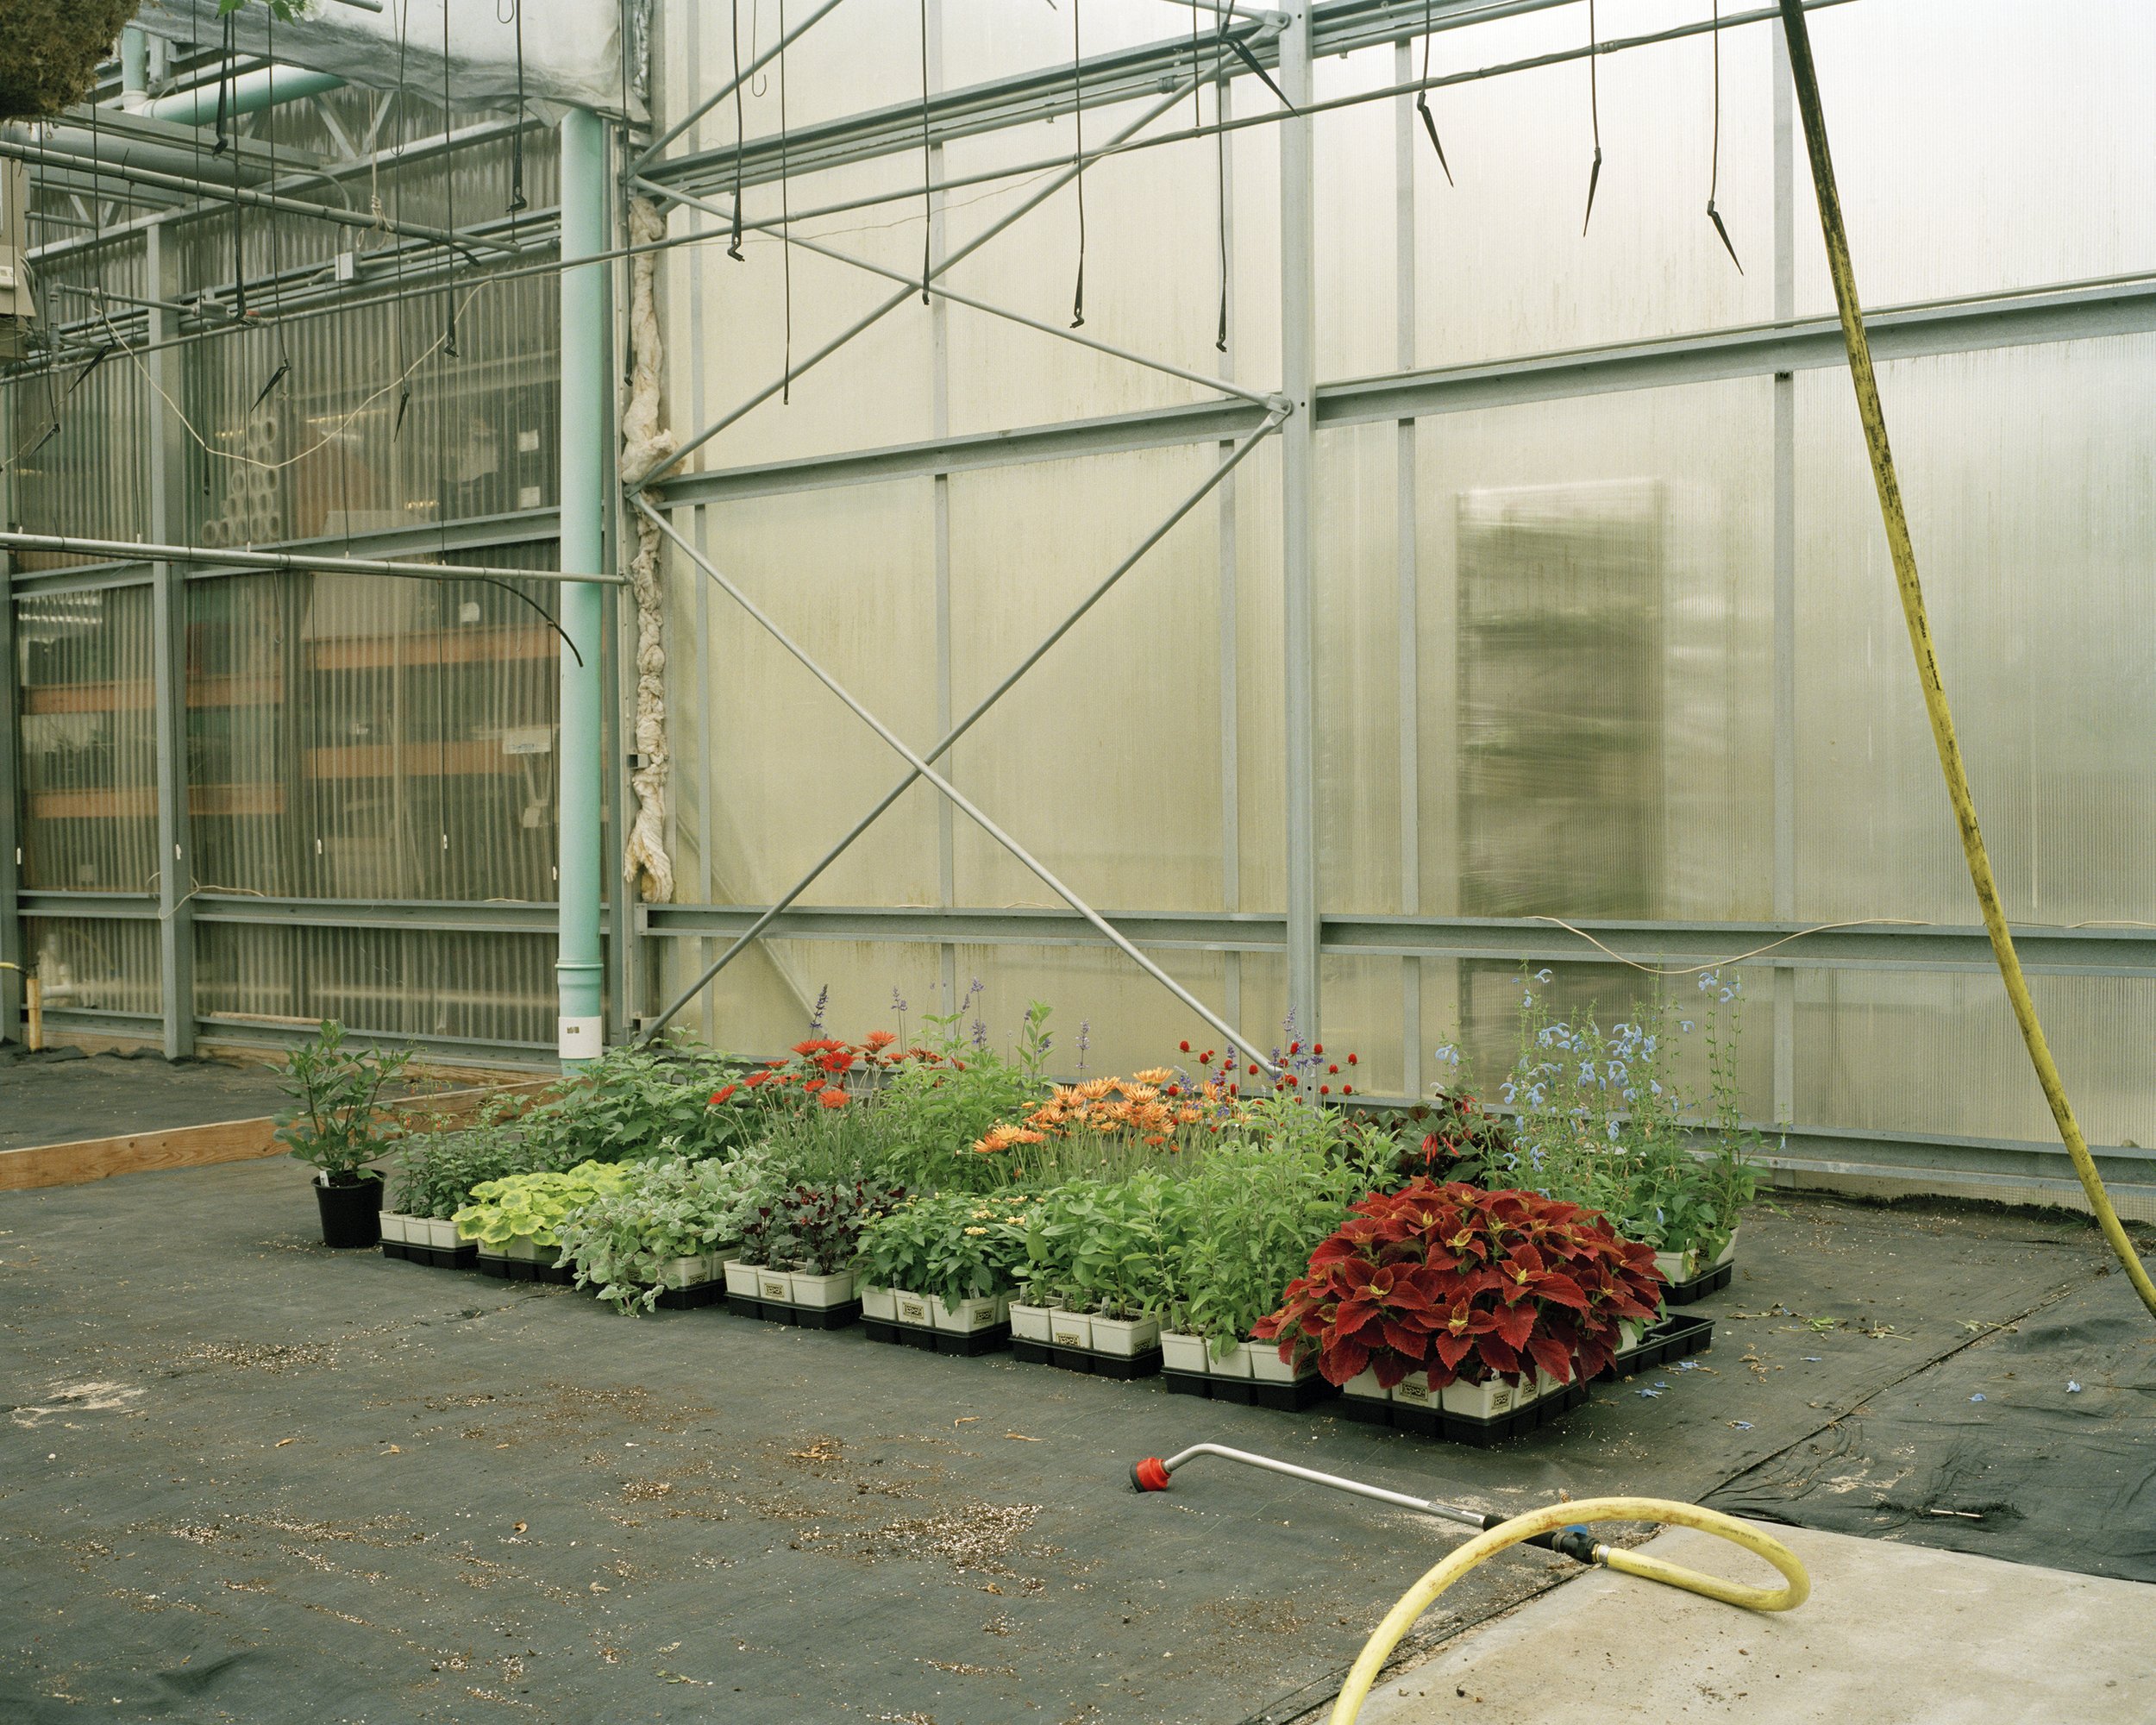 31 Aqueboque Greenhouse-Watering.jpg